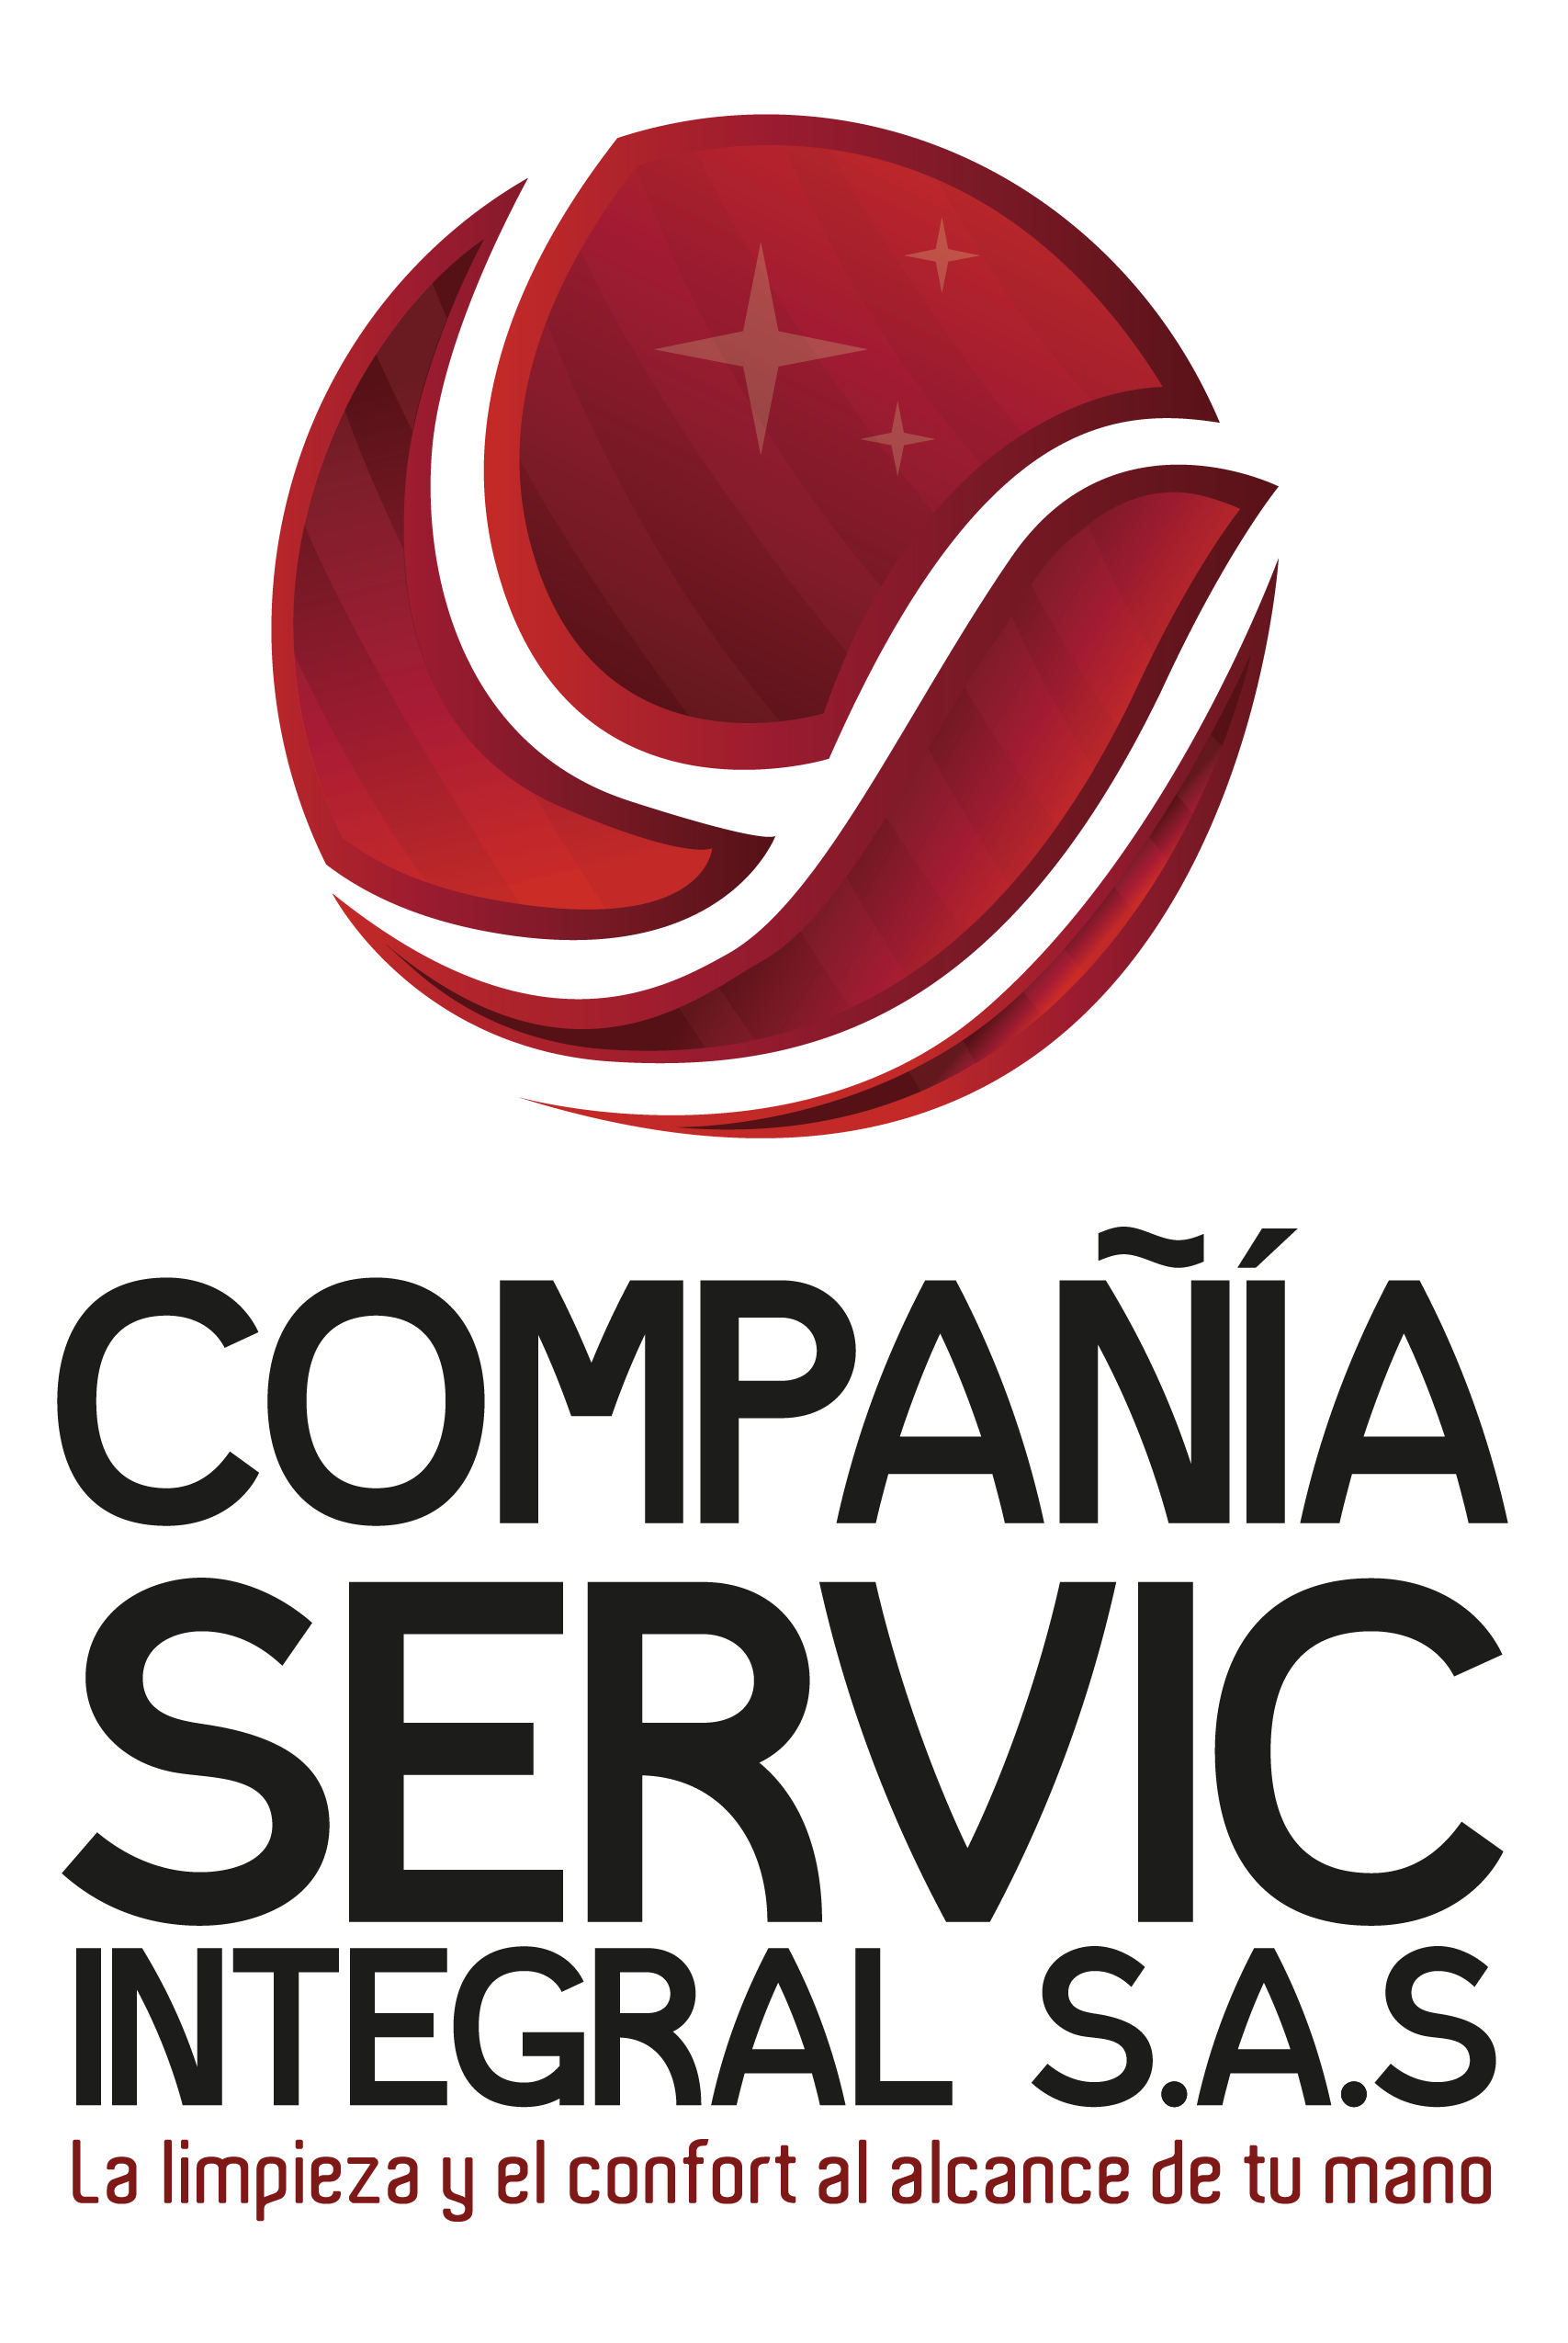 Logotipo de la Compañia Servic Integral S.A.S